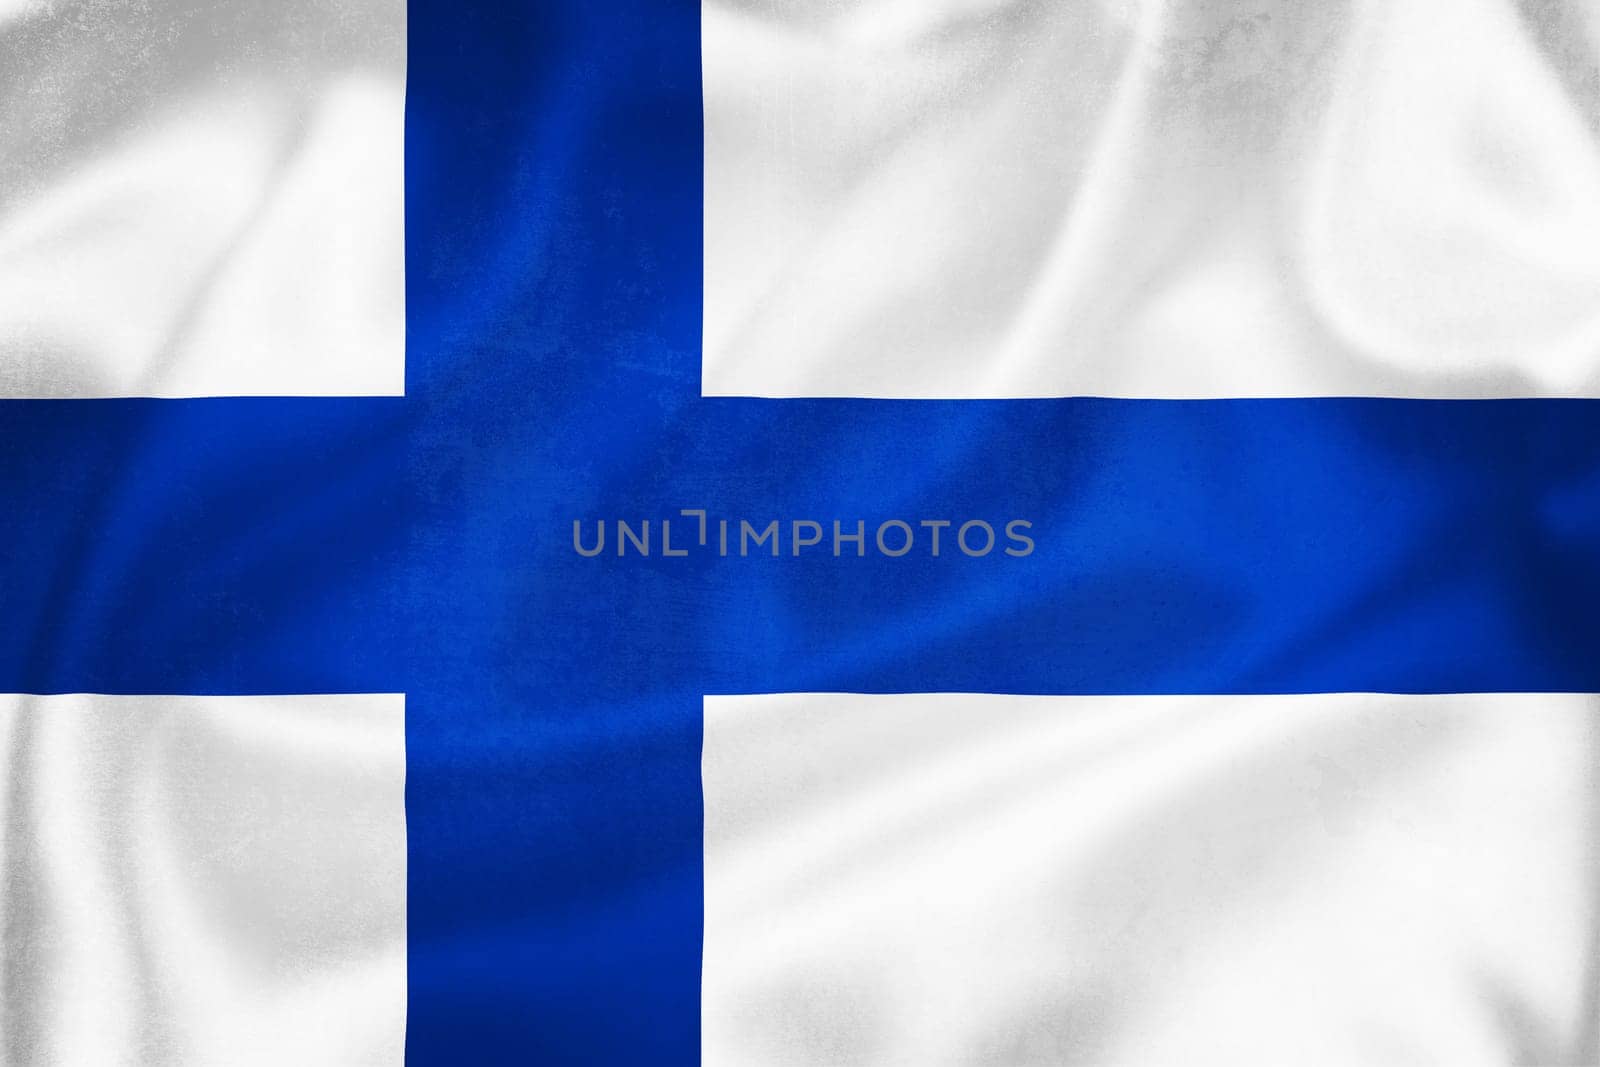 Grunge 3D illustration of Finland flag, concept of Finland 